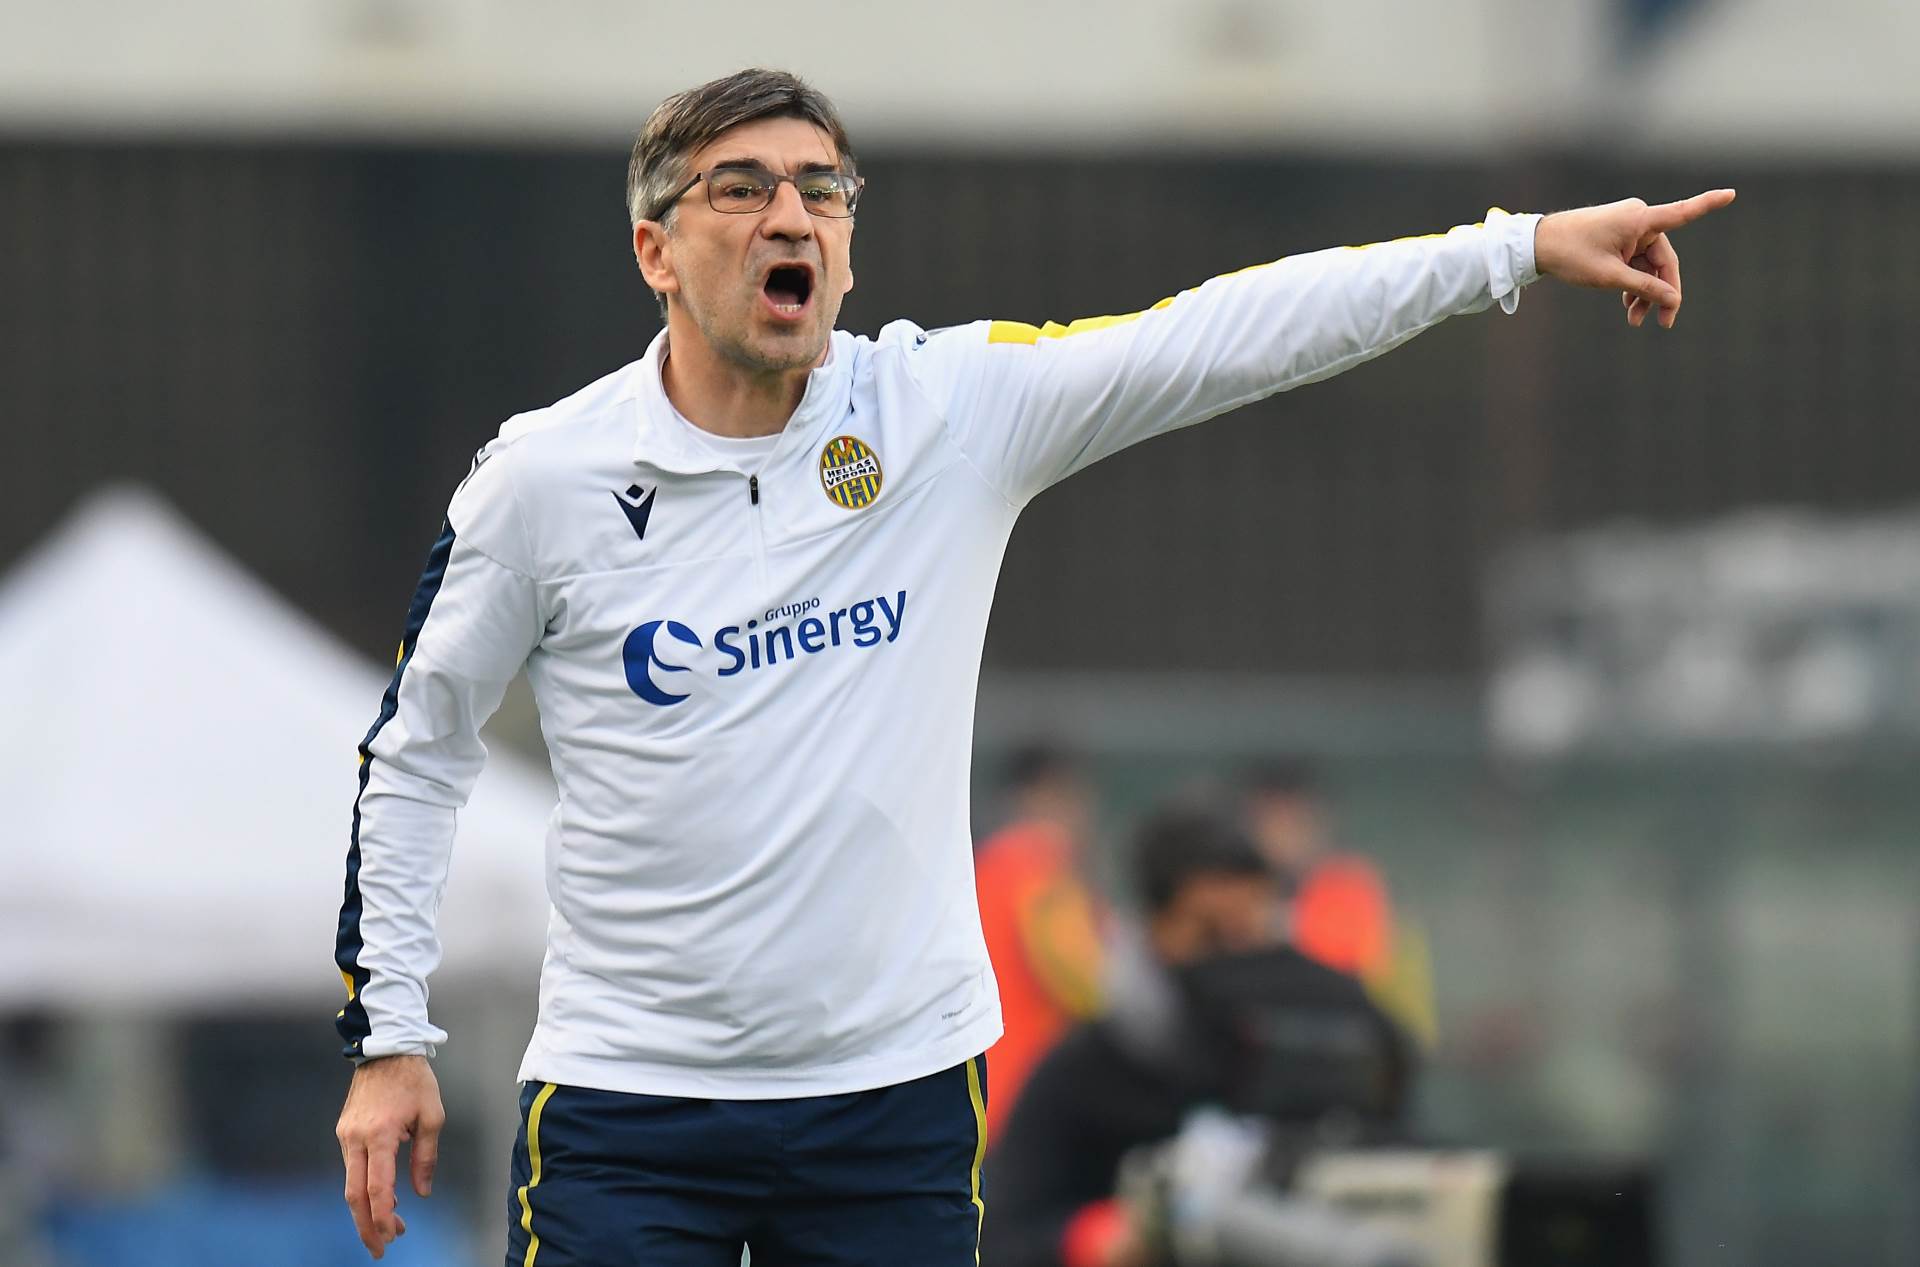  Ivan-Juric-trener-Verona-prelazak-u-Napoli-leto-2020-Serija-A 